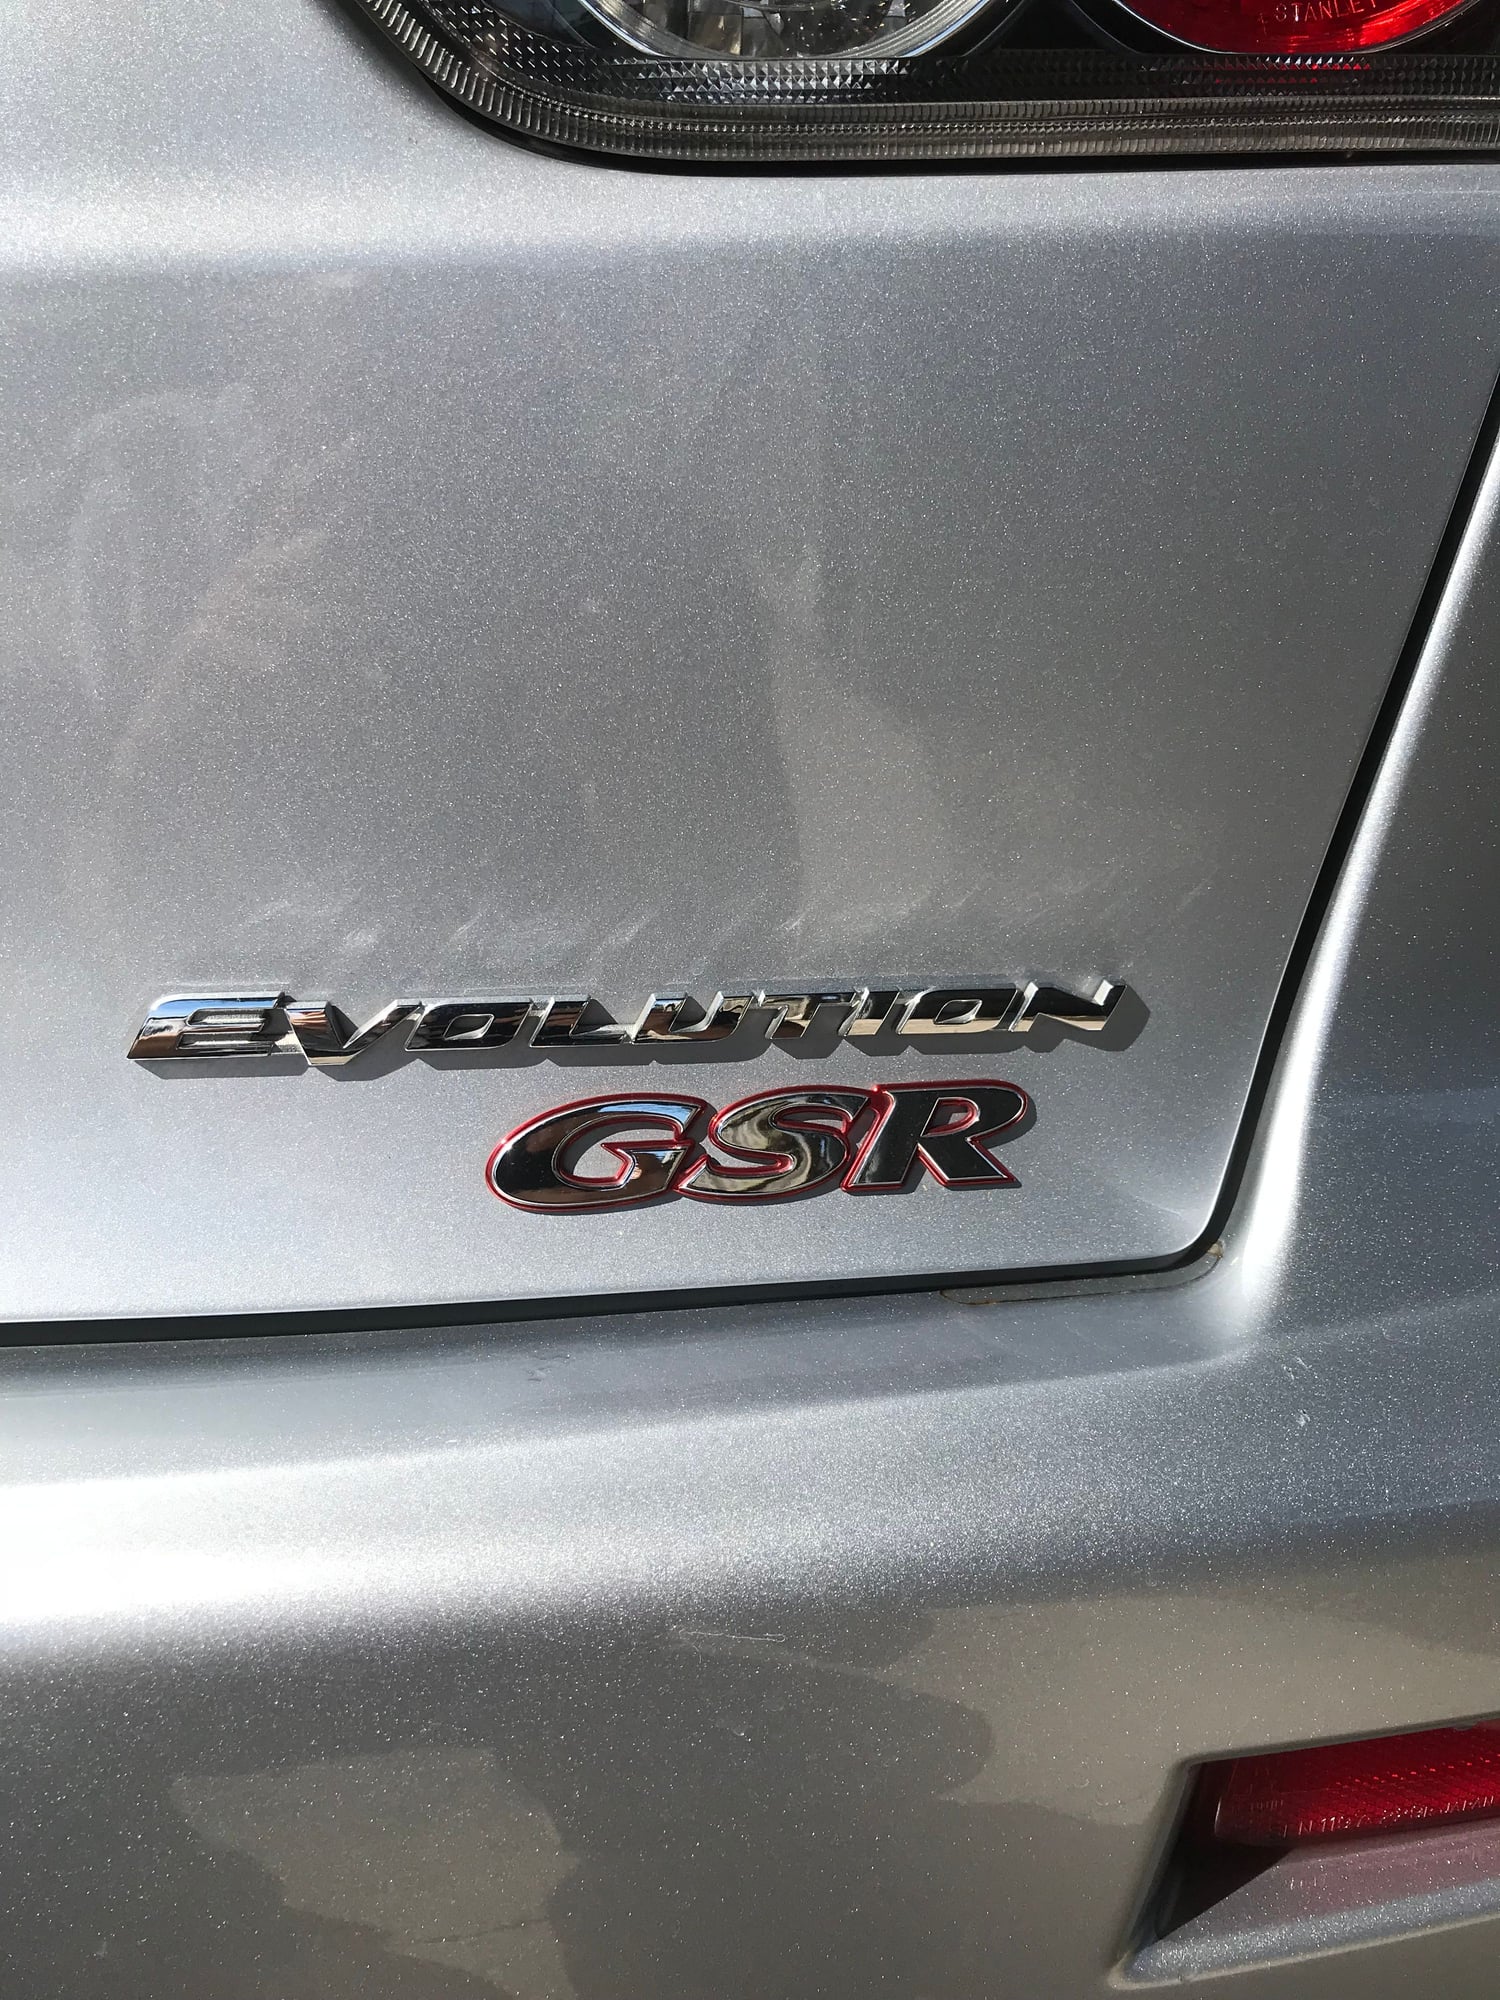 2014 Mitsubishi Lancer Evolution - 2014 mitsubishi evolution gsr - Used - VIN JA32W8FV5EU014905 - 20,219 Miles - 4 cyl - AWD - Sedan - Silver - Westwego, LA 70094, United States